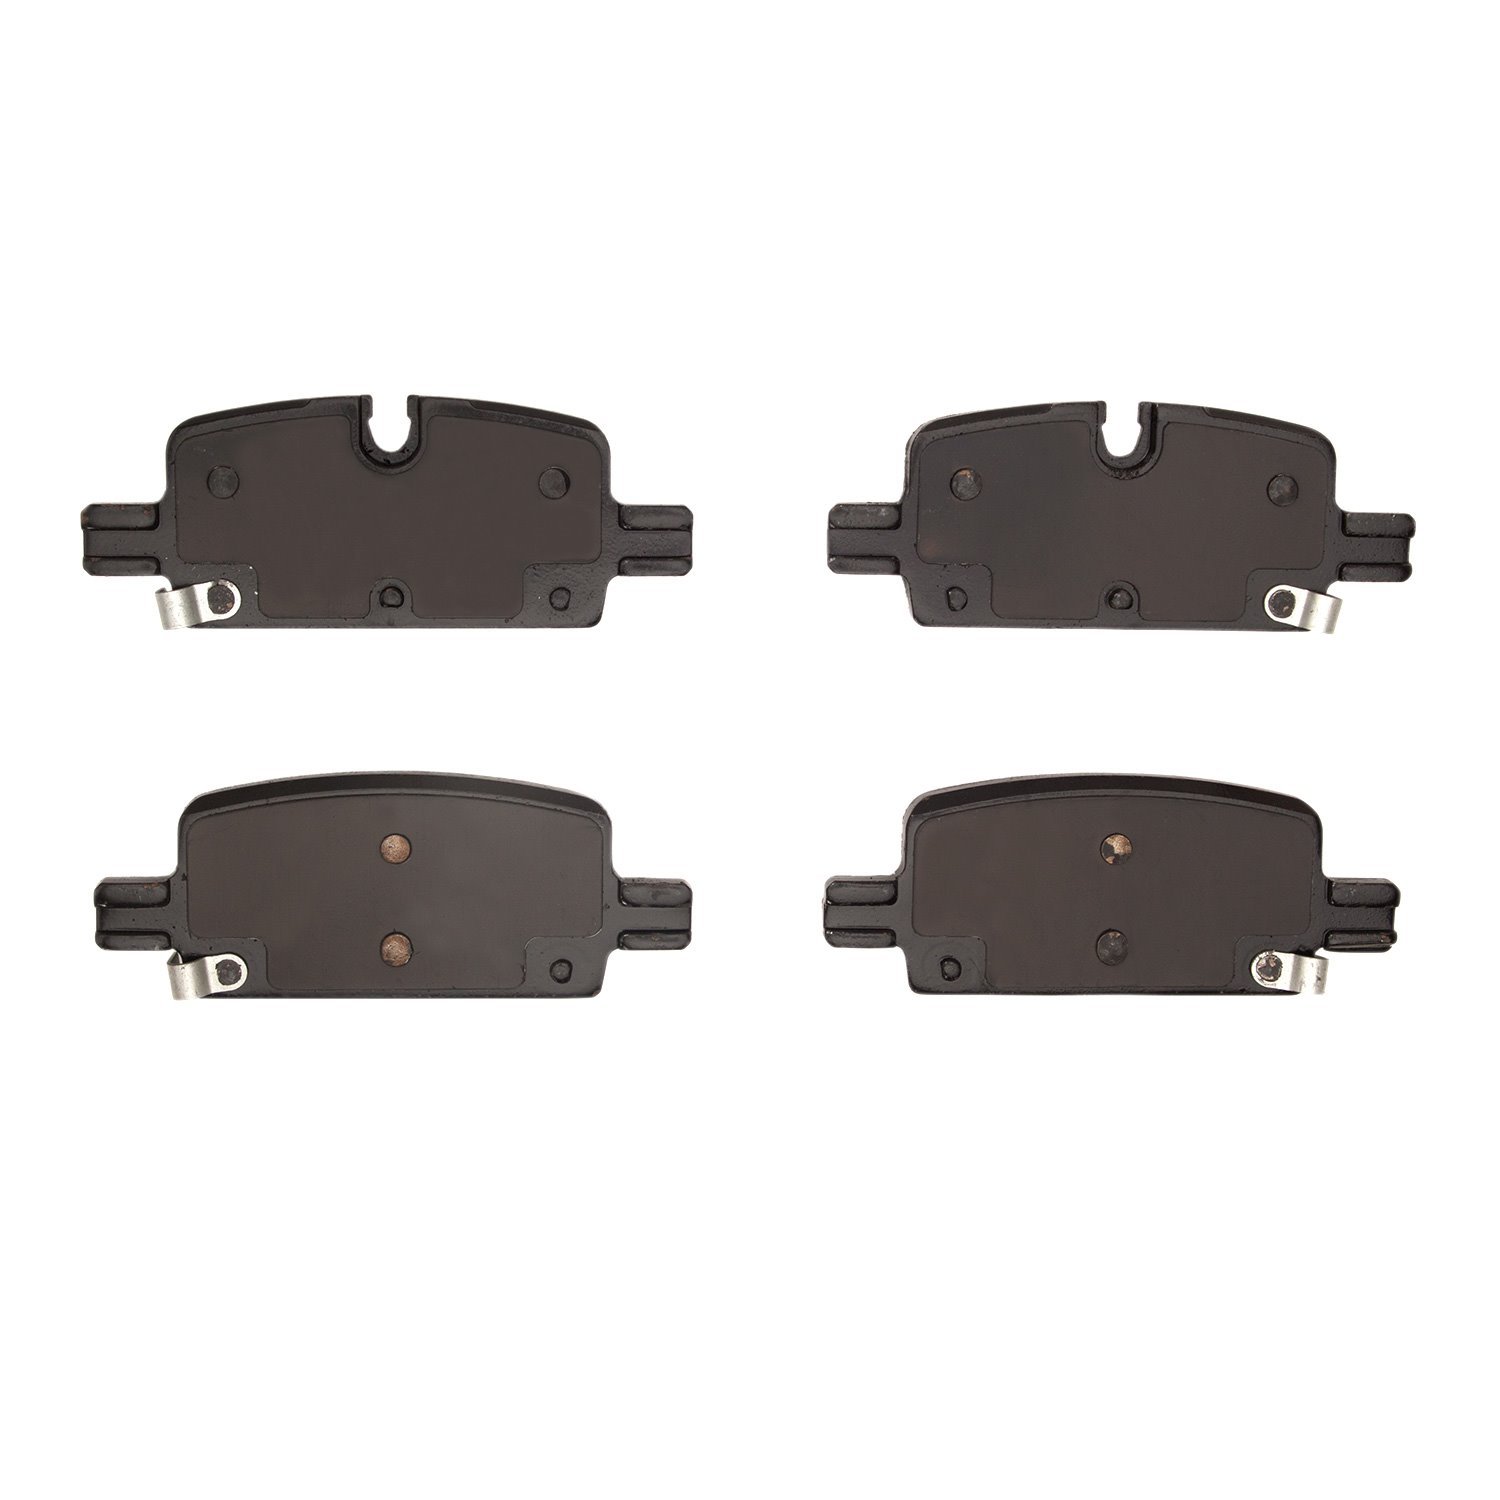 Ultimate-Duty Brake Pads Kit, Fits Select Multiple Makes/Models